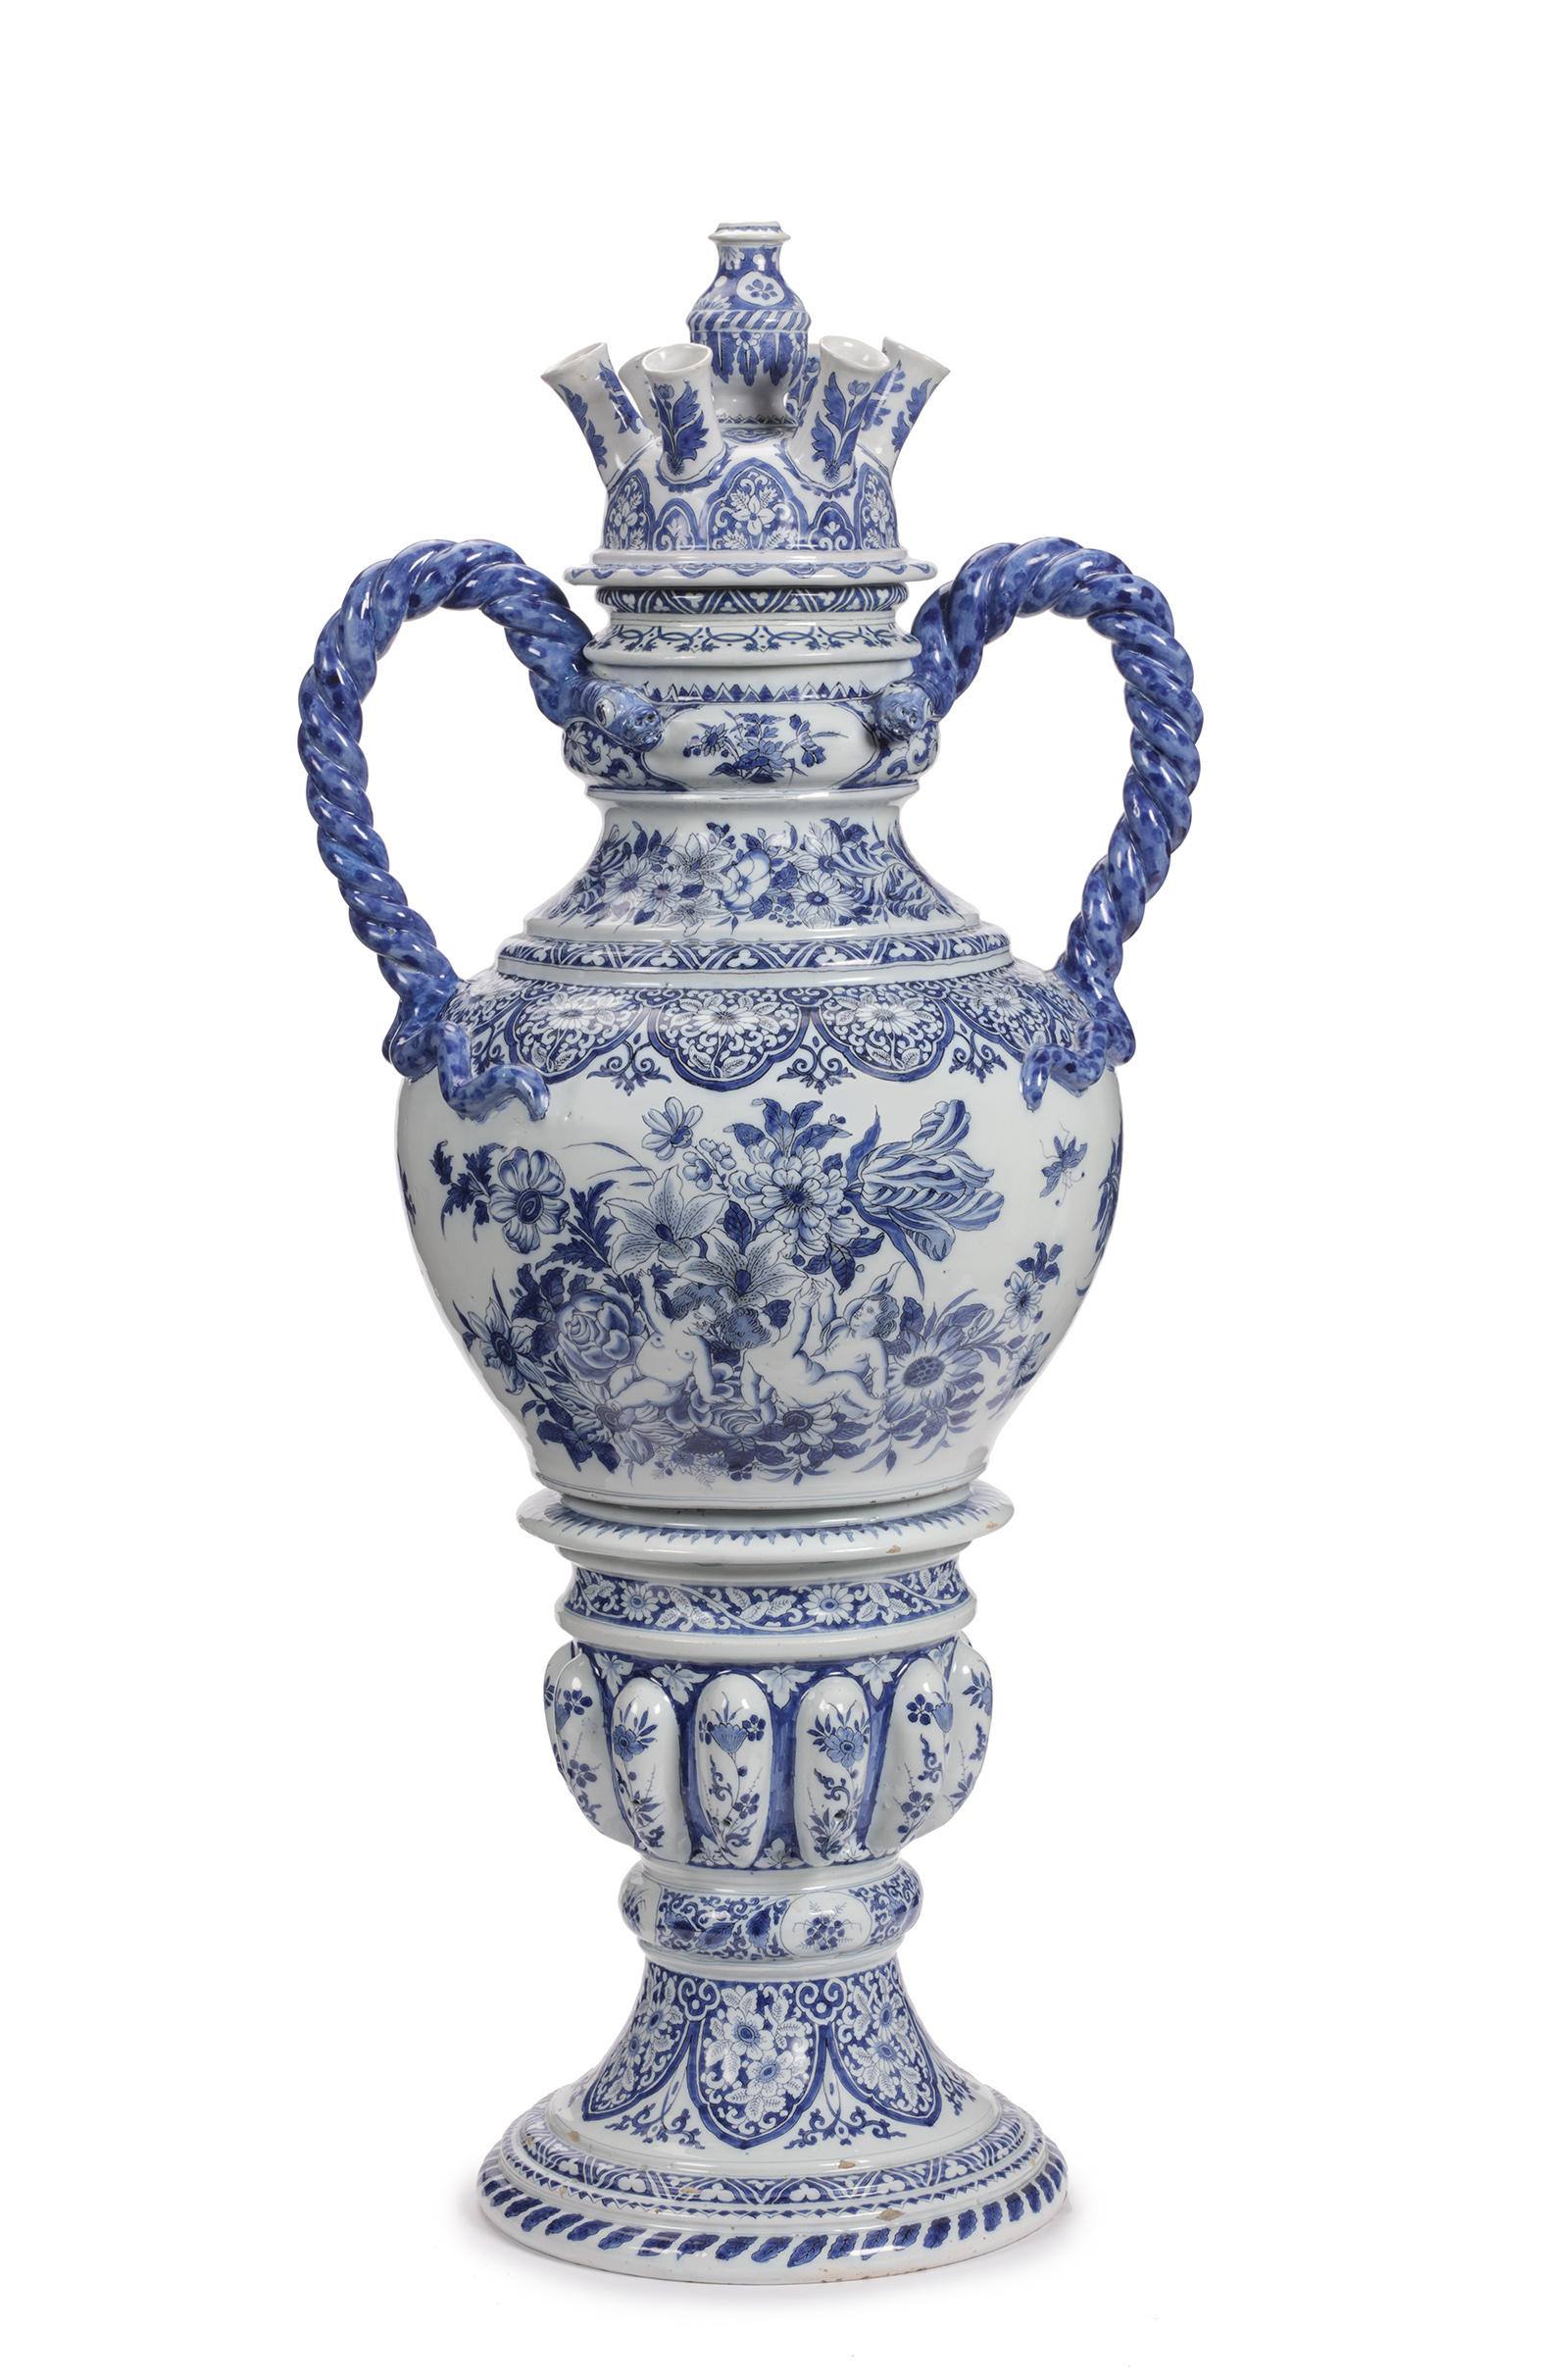 D2391 Flower Vase Delft 1690 Adrianus Kocx